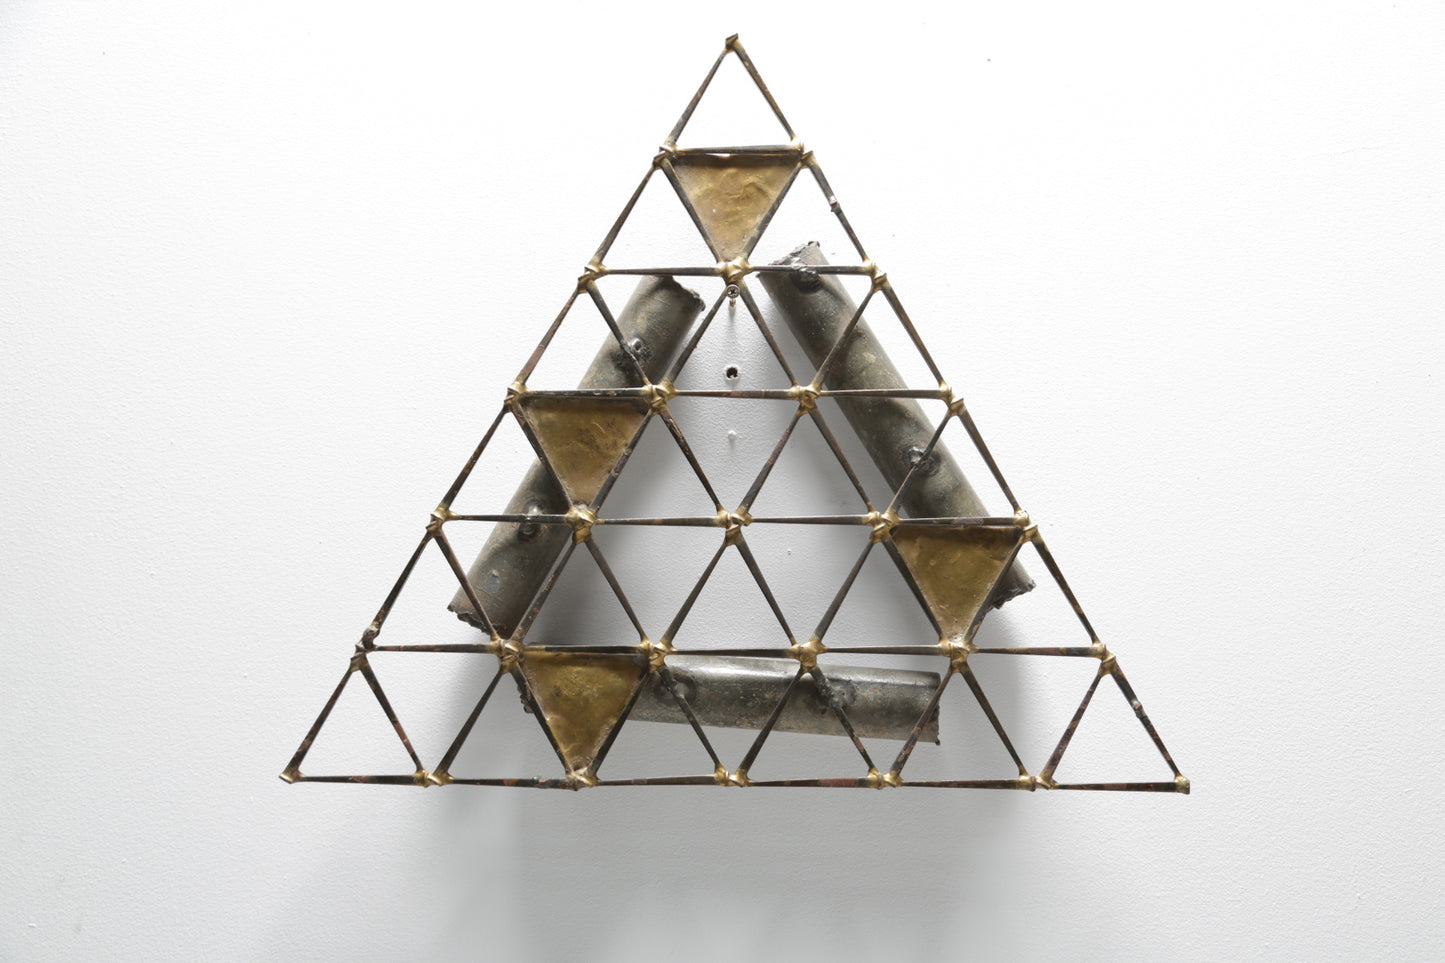 Brutalist triangular wall sculpture in the style of Ron Schmidt